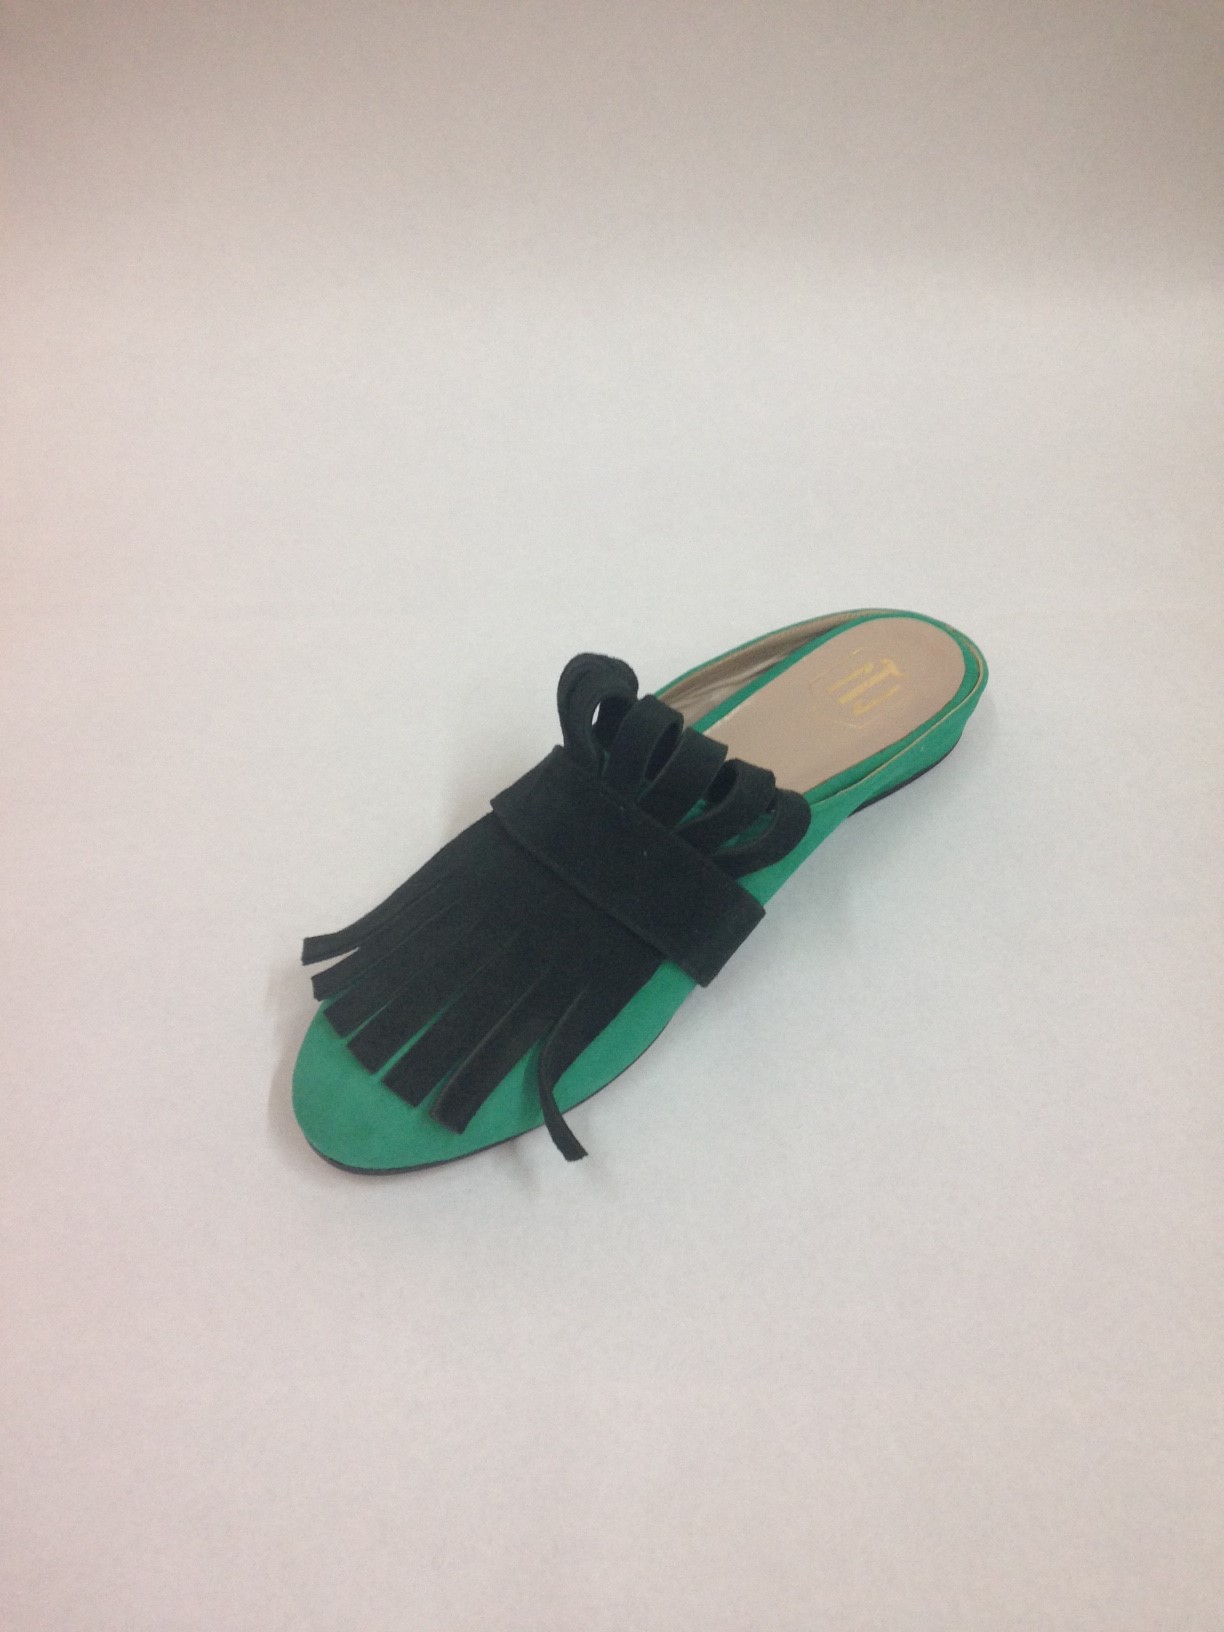 Teresa Nuñez Turquoise Leather Slipper Shoe